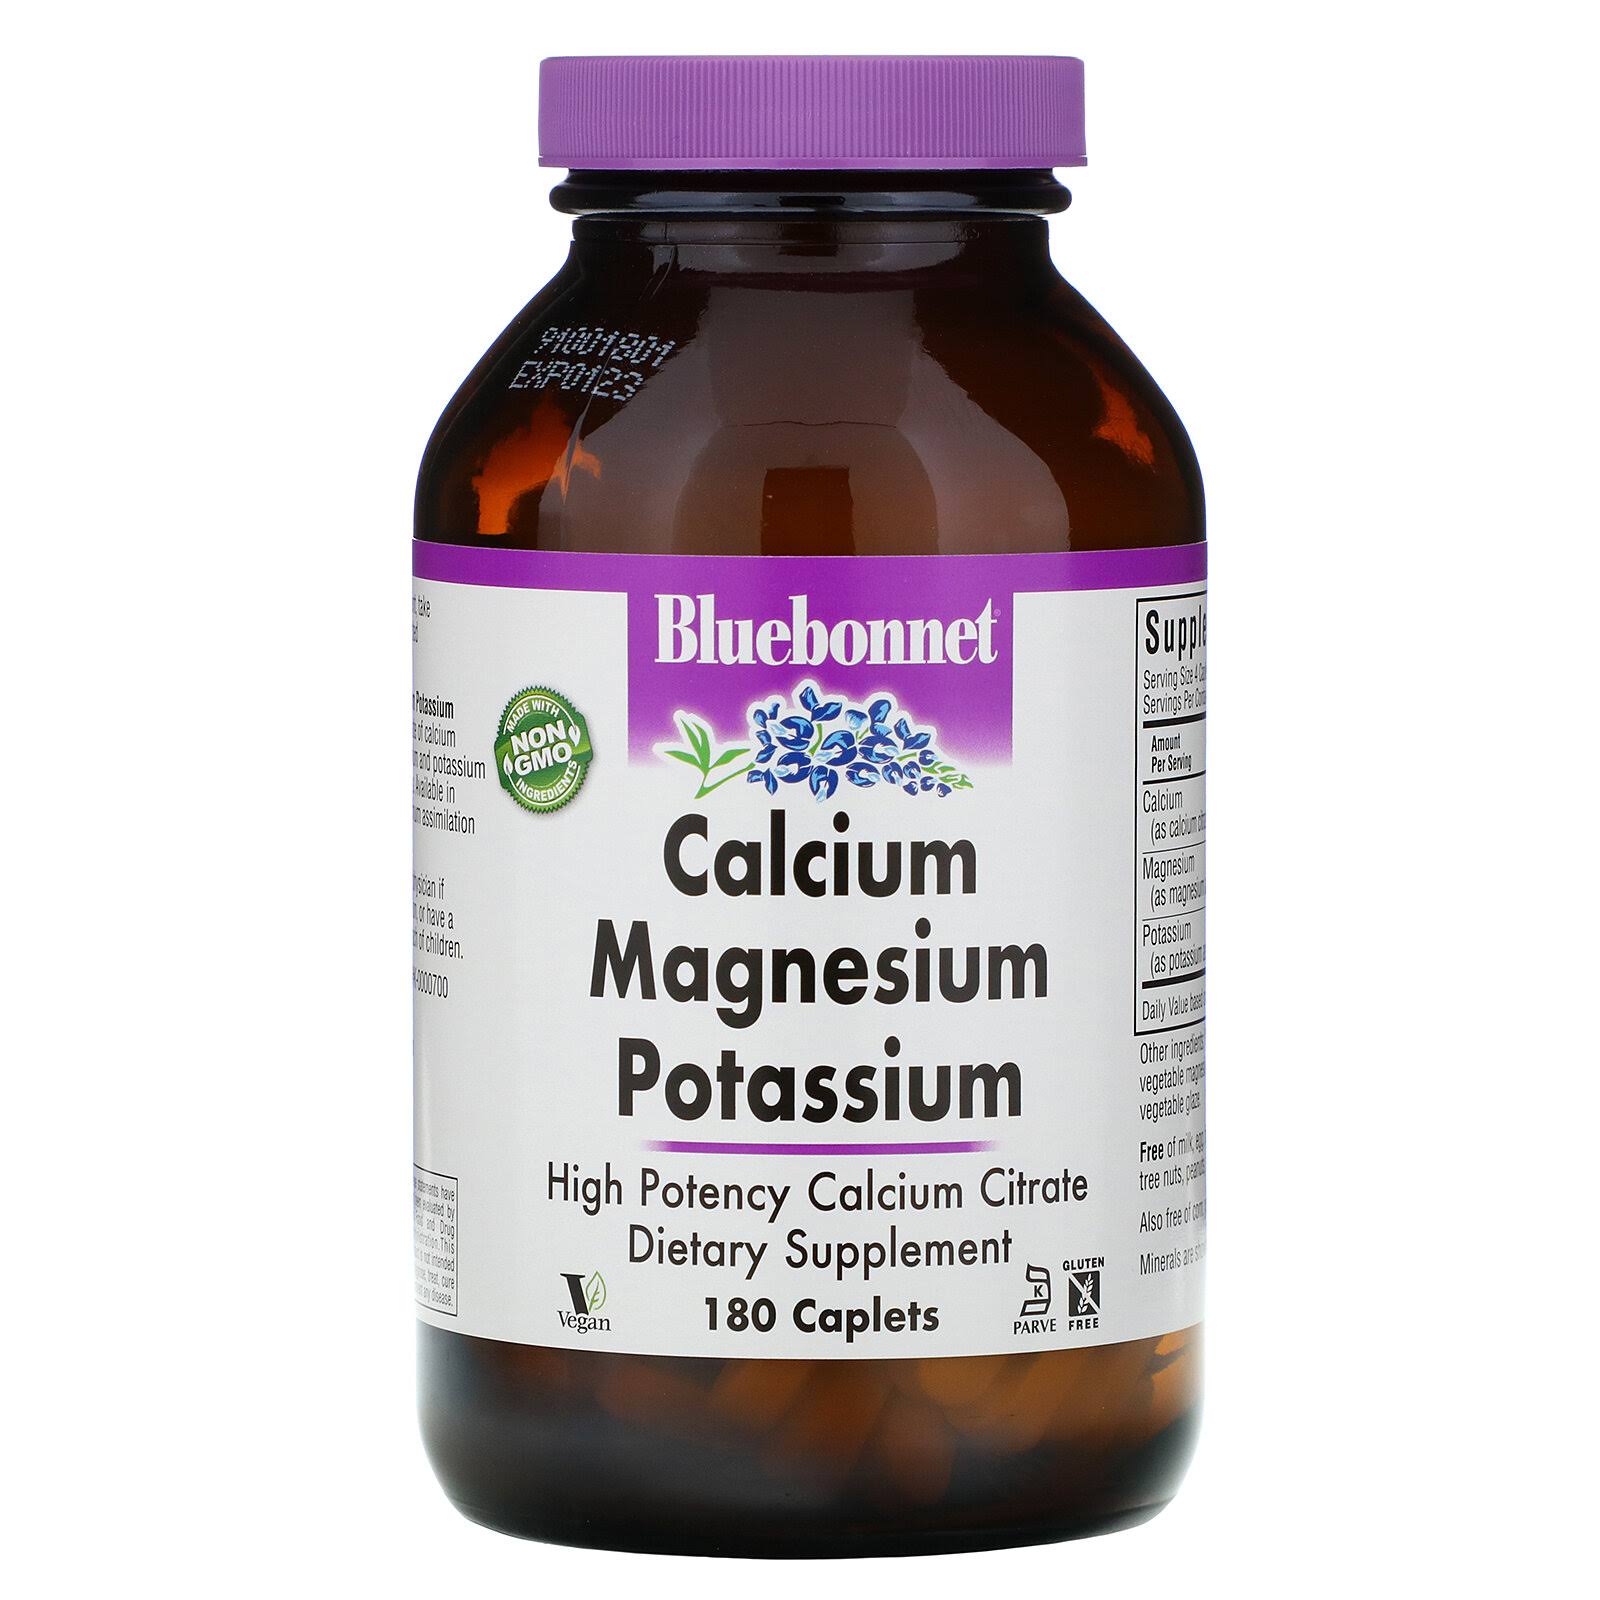 Bluebonnet Nutrition Calcium Magnesium Potassium Supplement - 180 Caplets